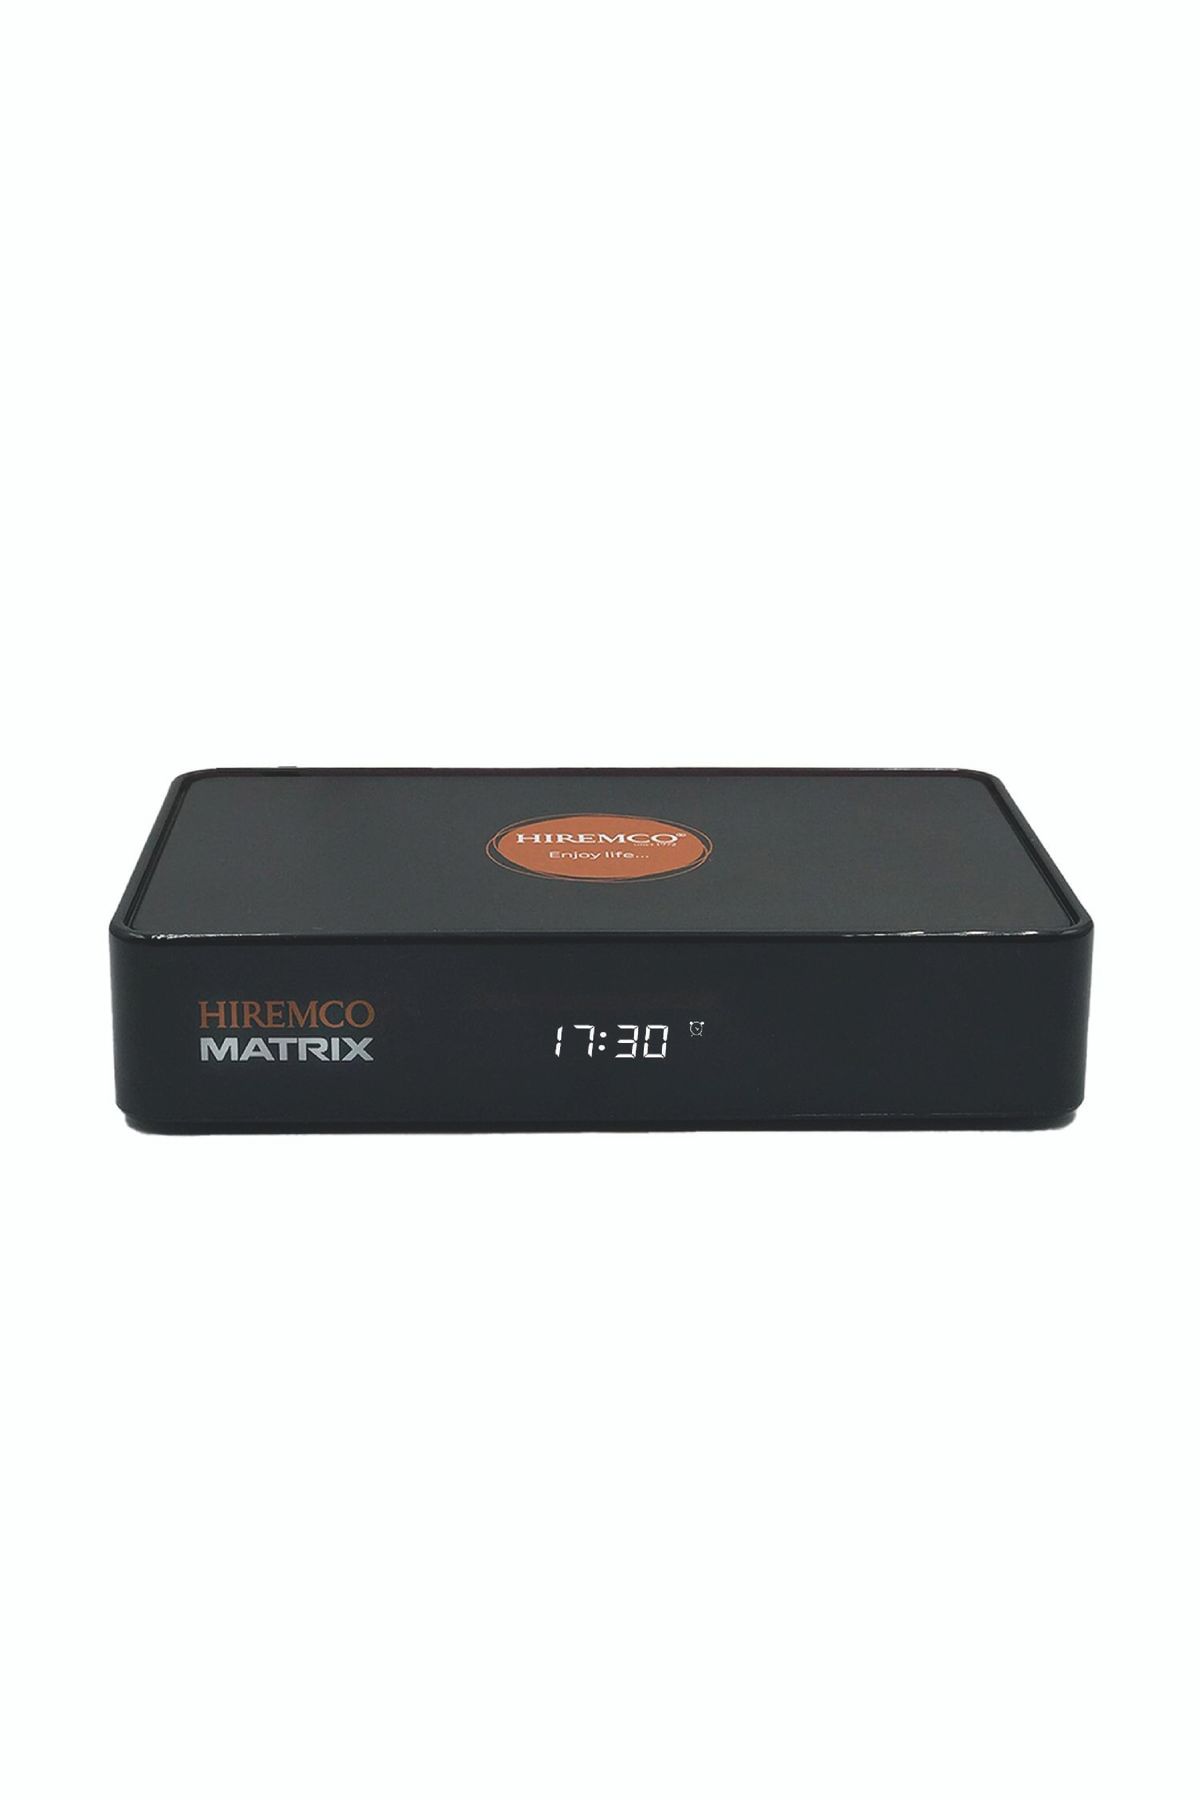 Hiremco Matrıx Settop Box Hybrid 4k Android Uydu Alıcısı